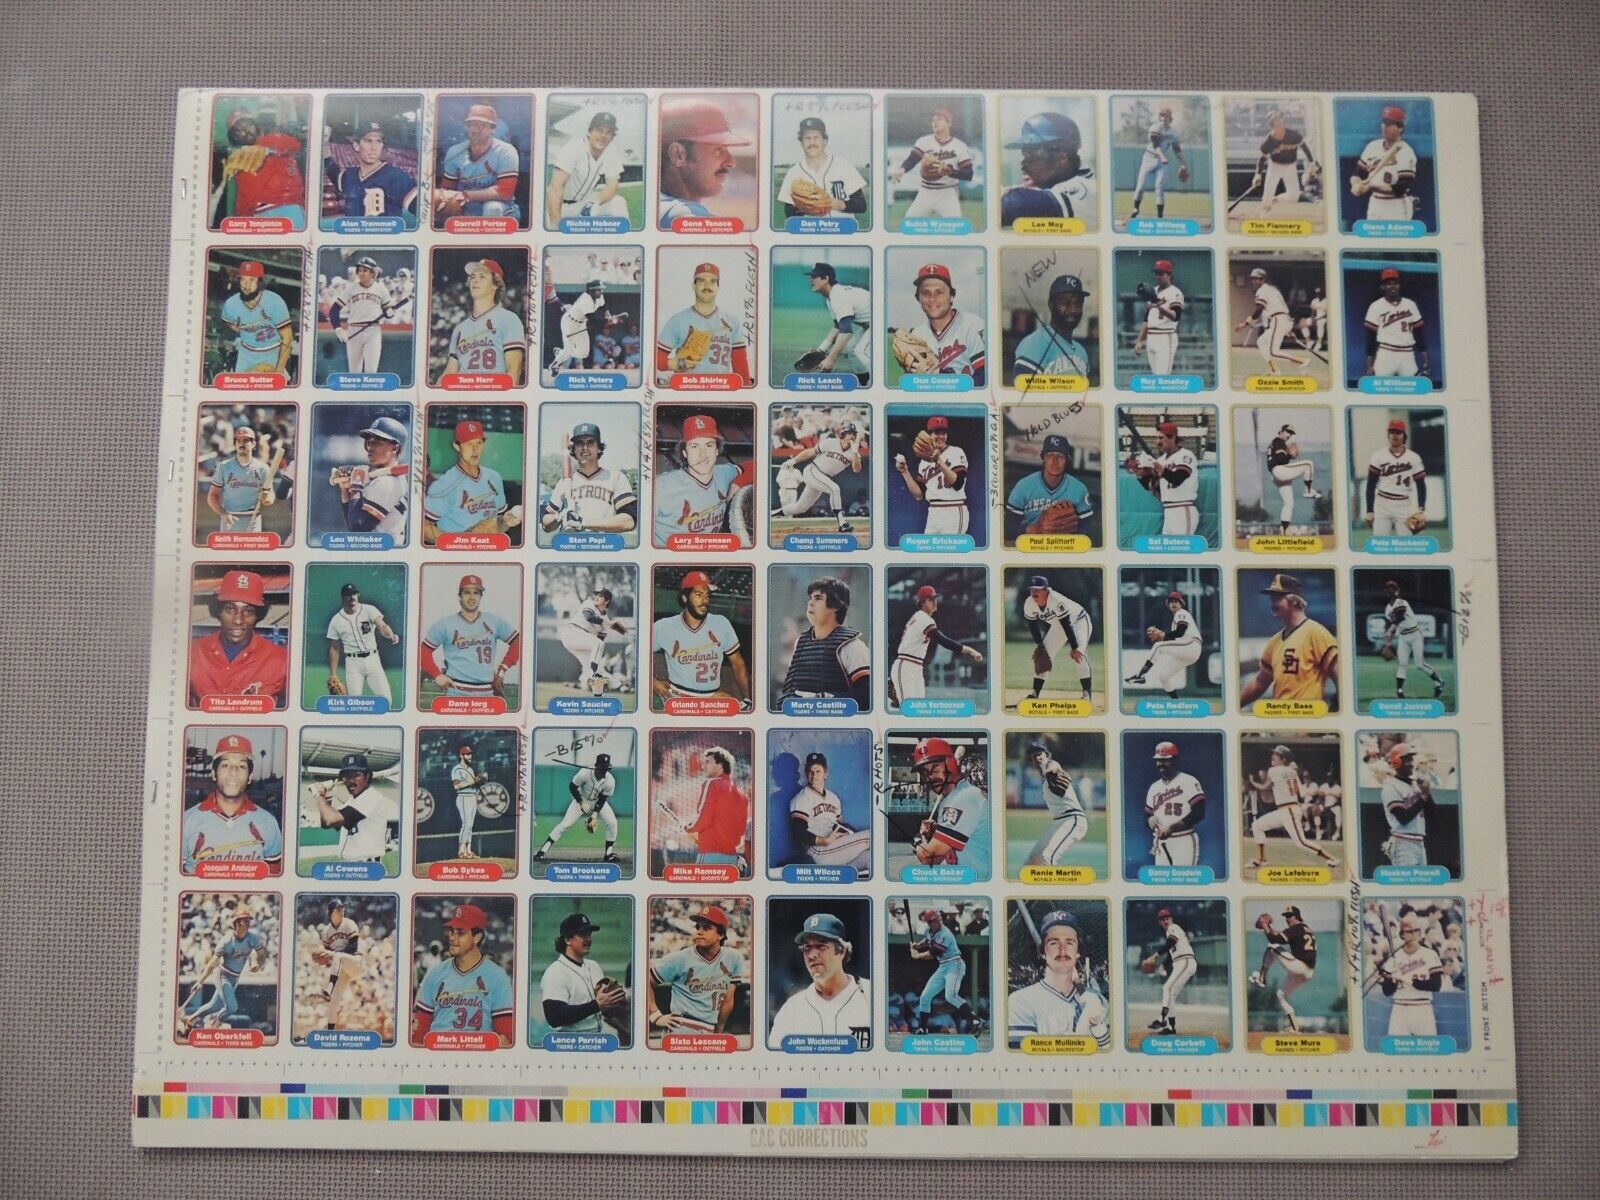 11 1982 Fleer Uncut Progressive Proof Baseball Card Sheets - Littlefield error